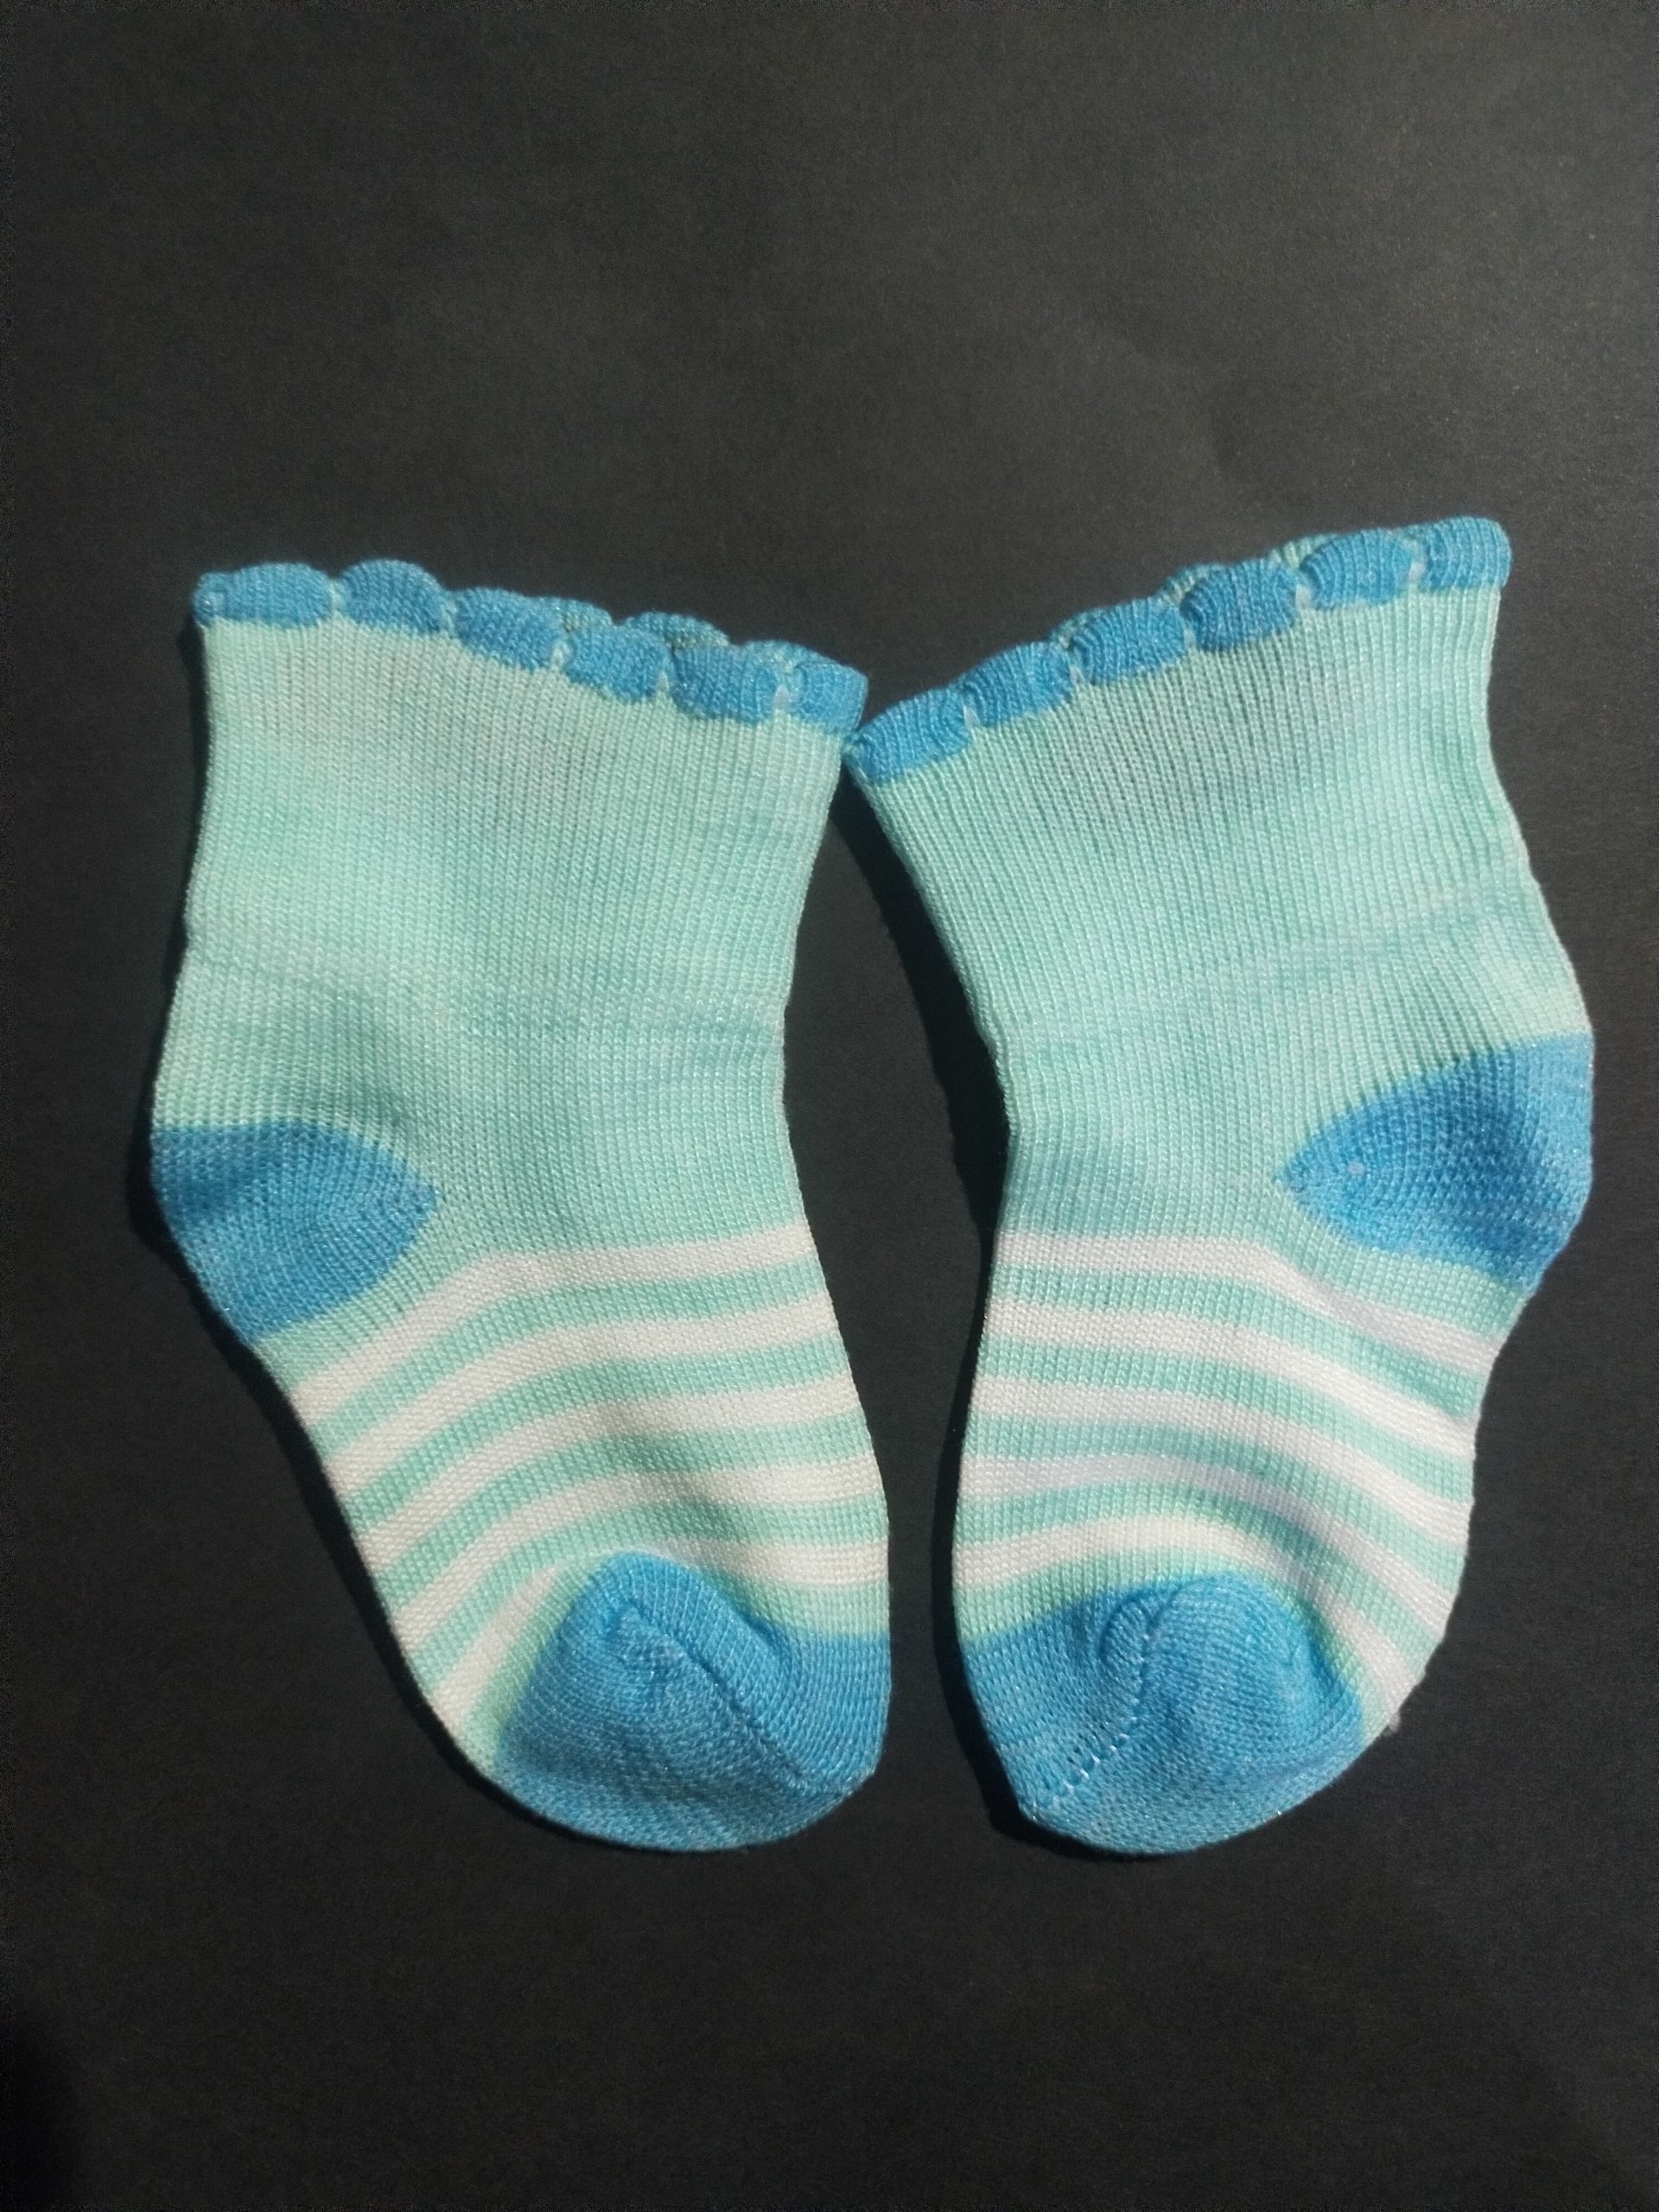 A socks pair